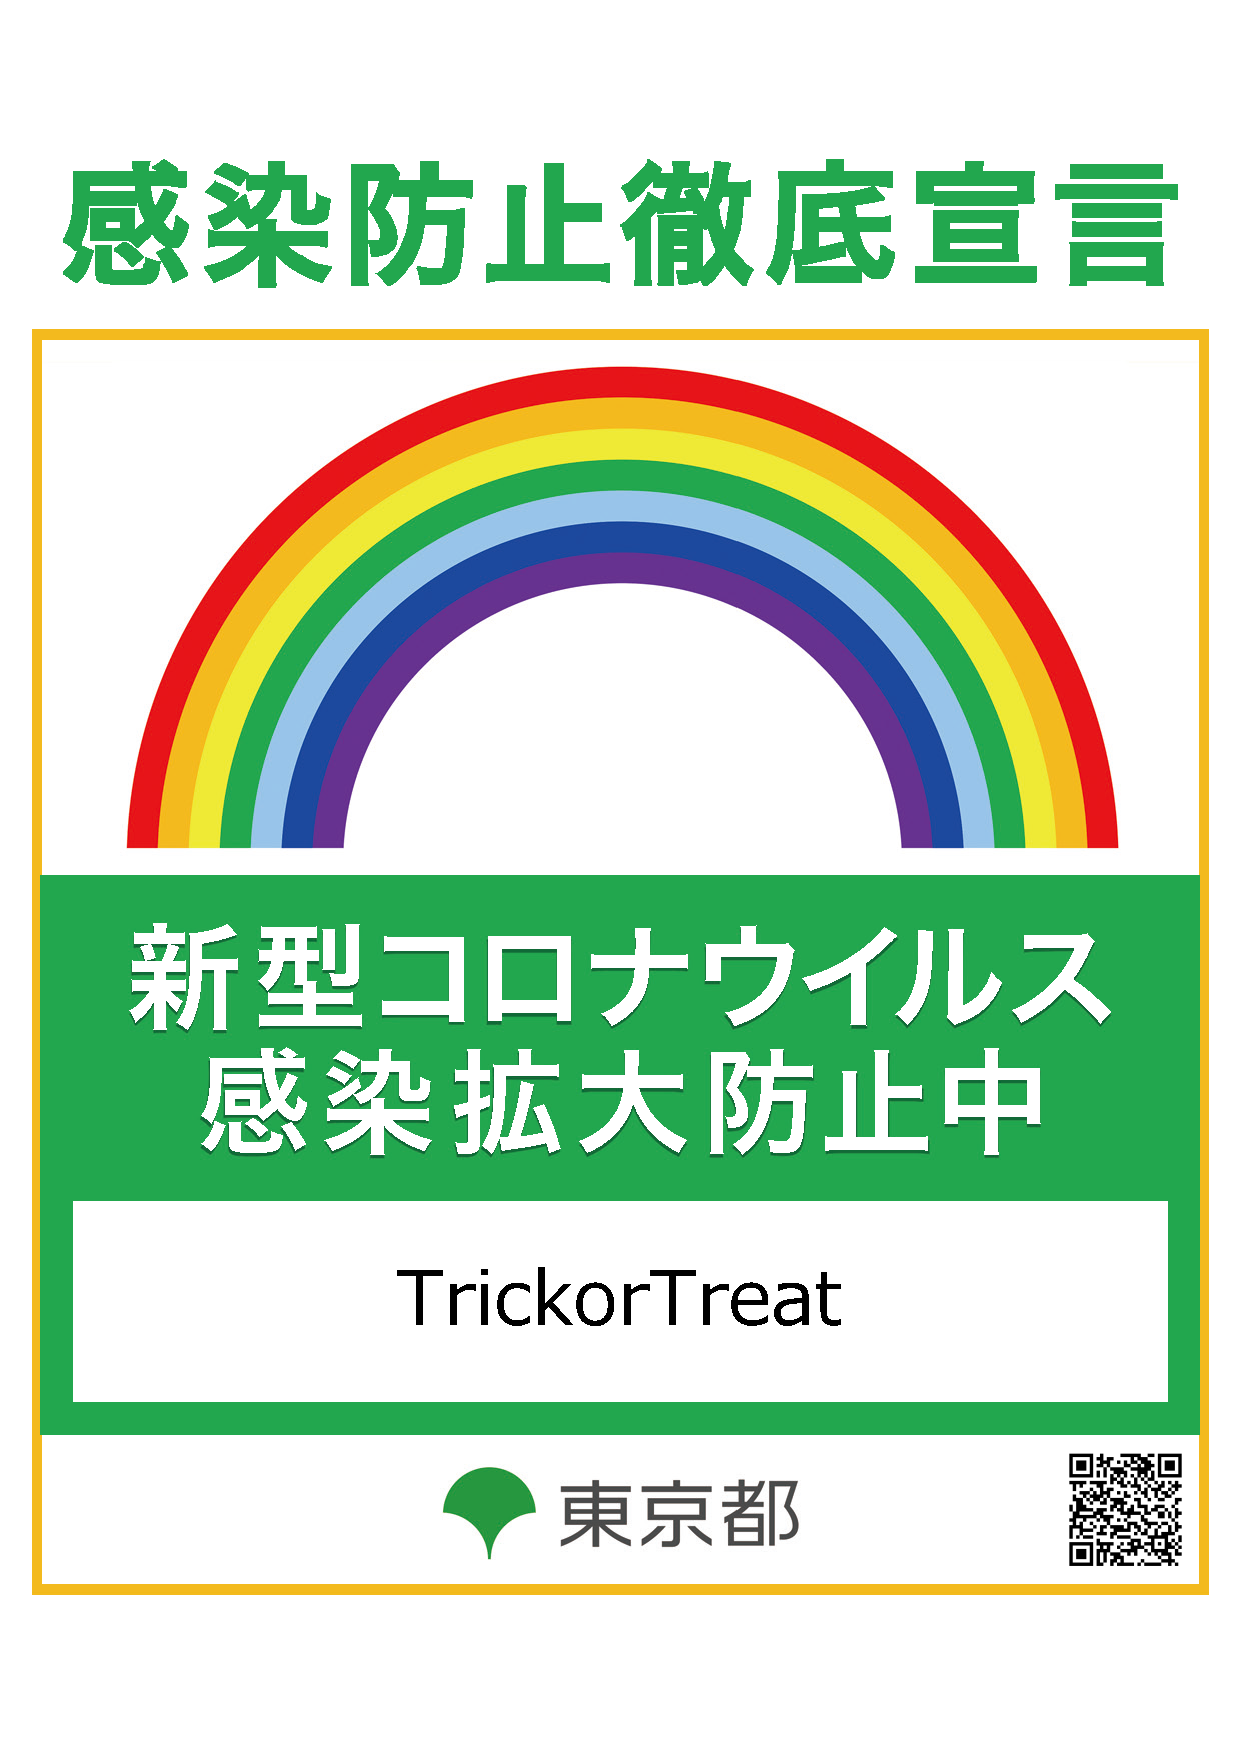 TrickorTreat-感染防止徹底宣言